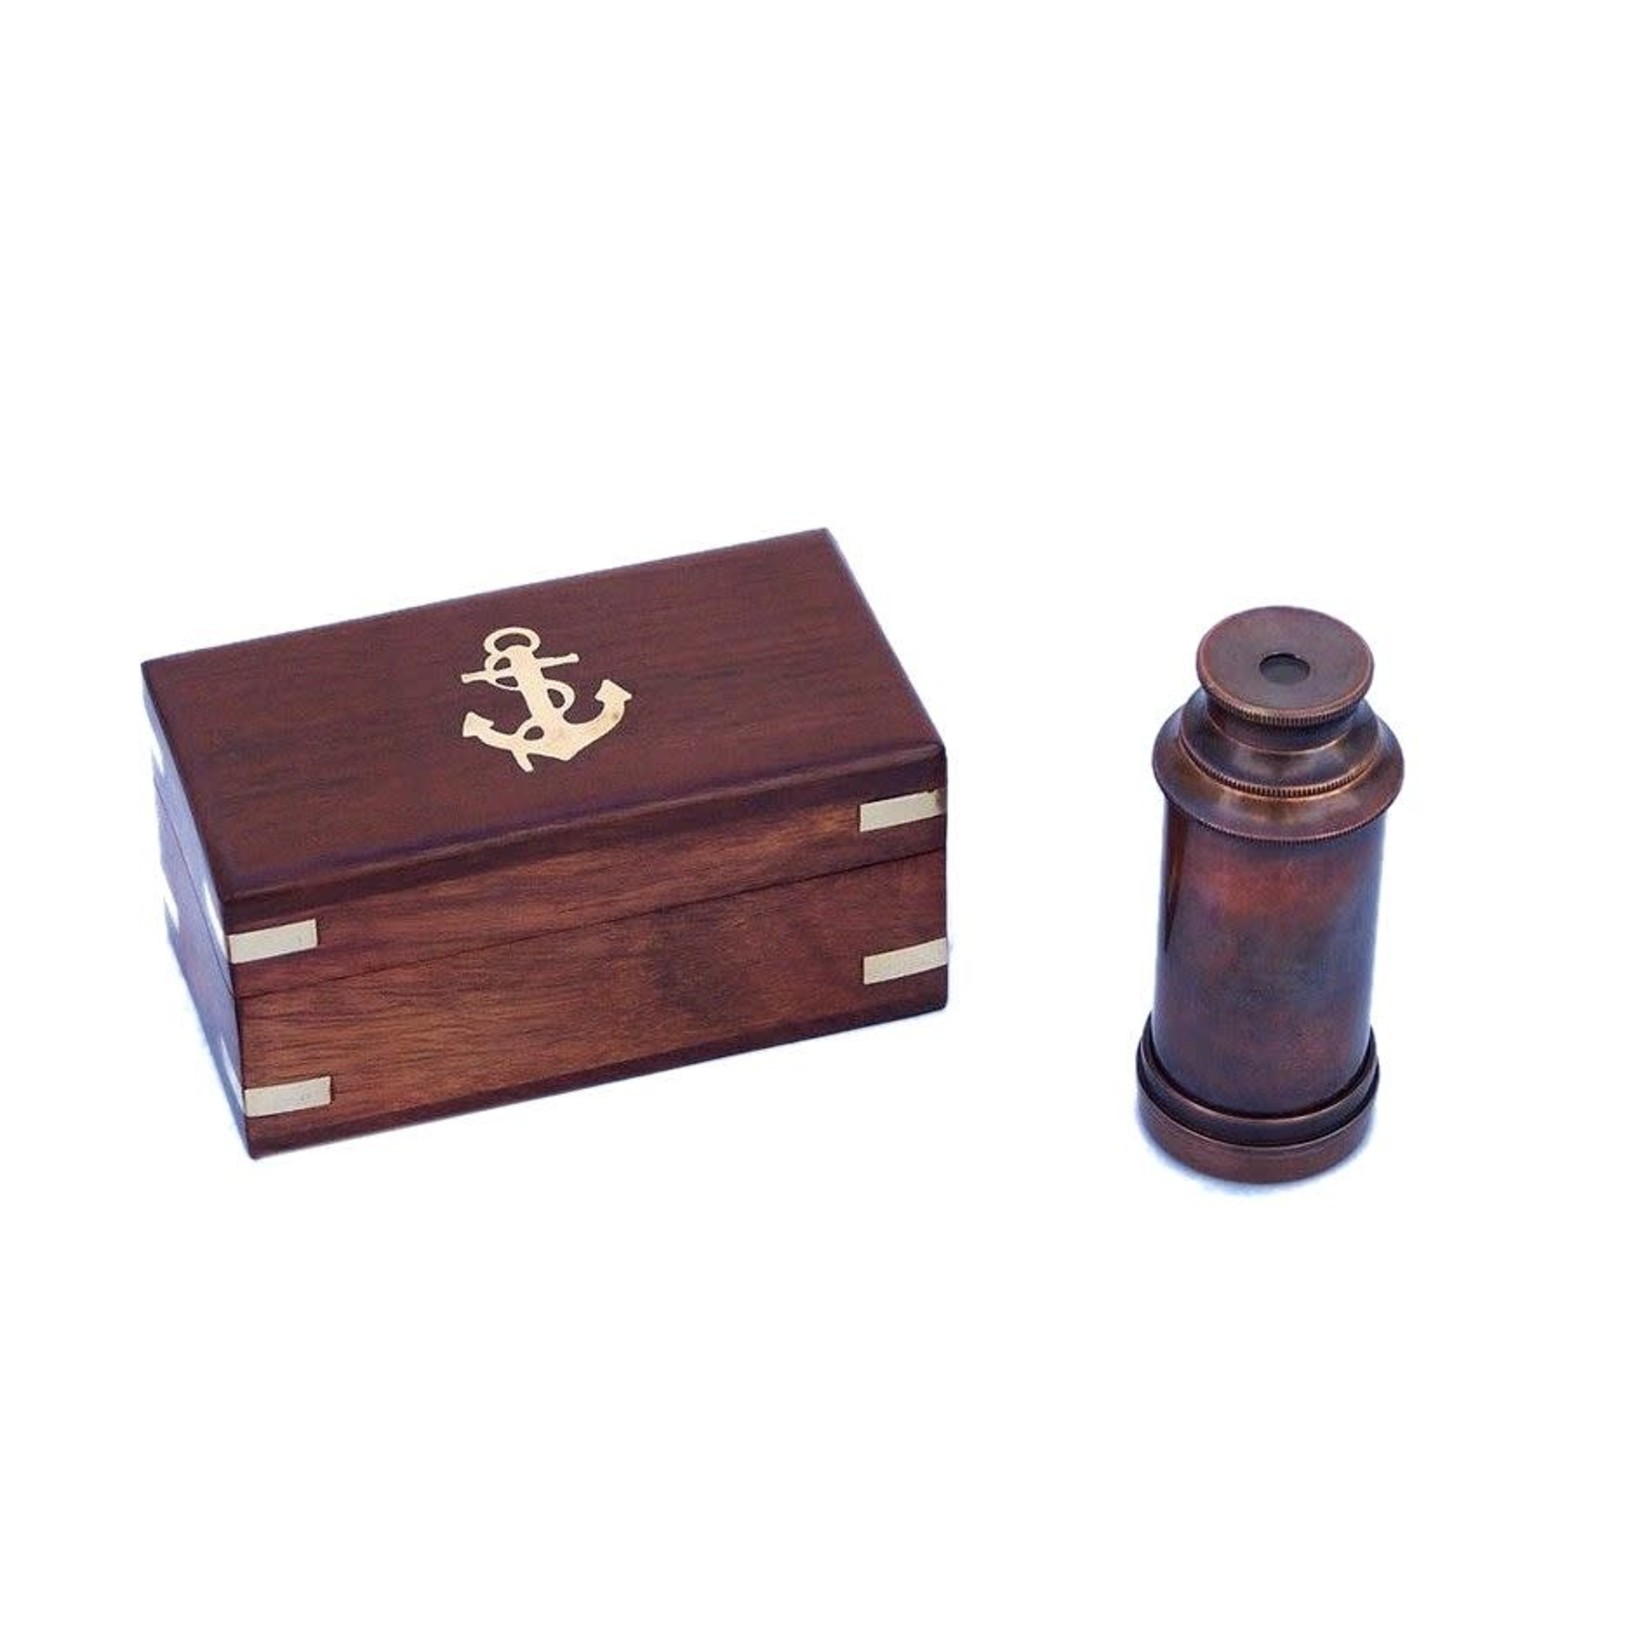 7" Copper Spyglass & Rosewood Box